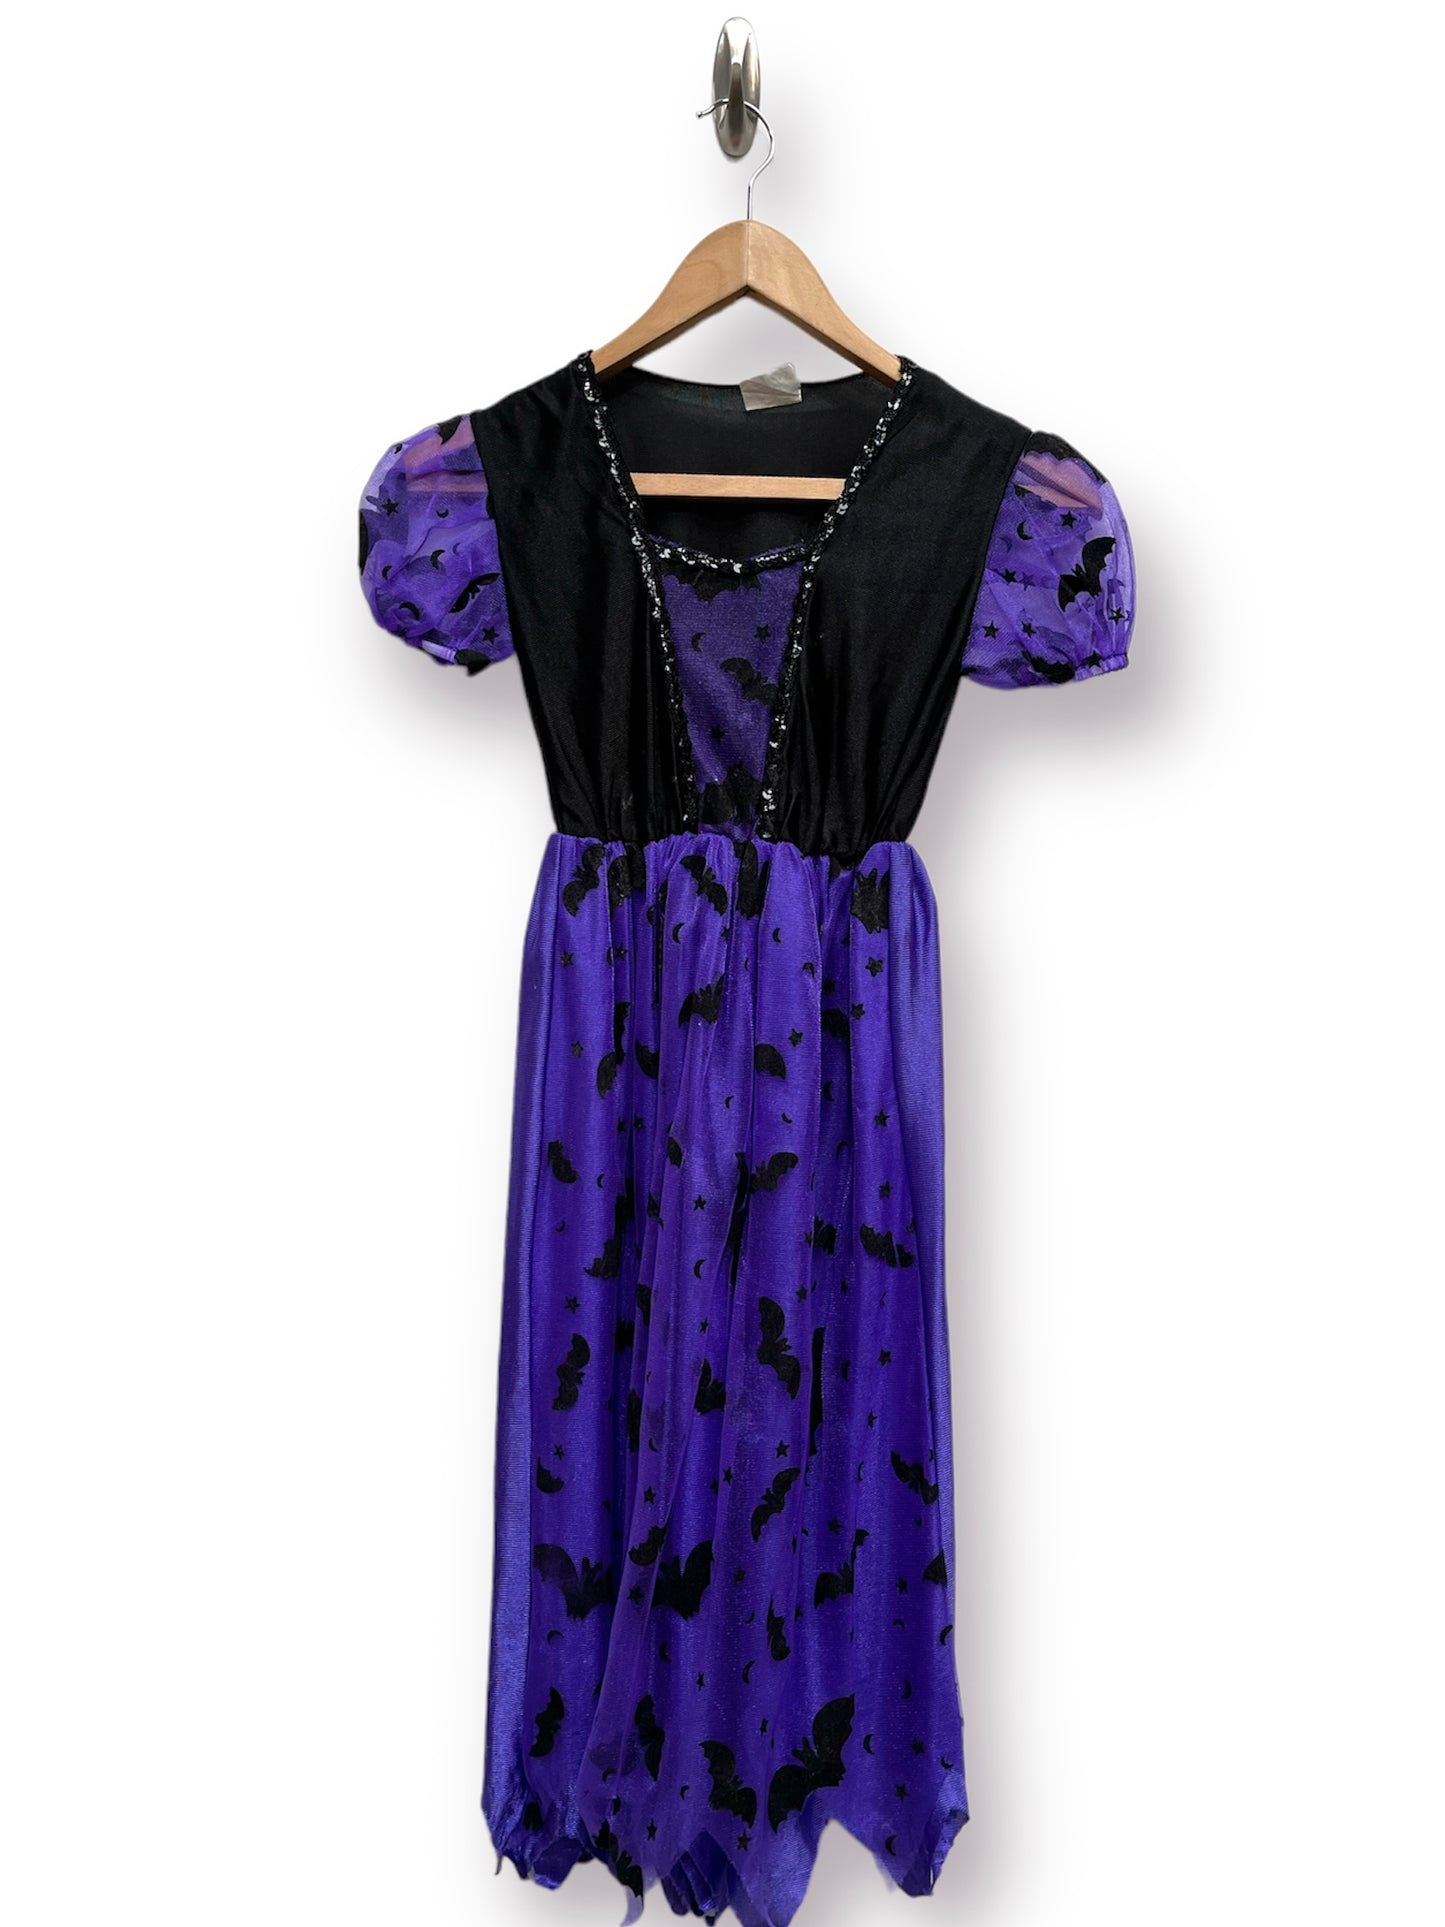 Girls Halloween Purple Black Witch Costume Age 4-6 (Small) - Ex Hire Fancy Dress Costume